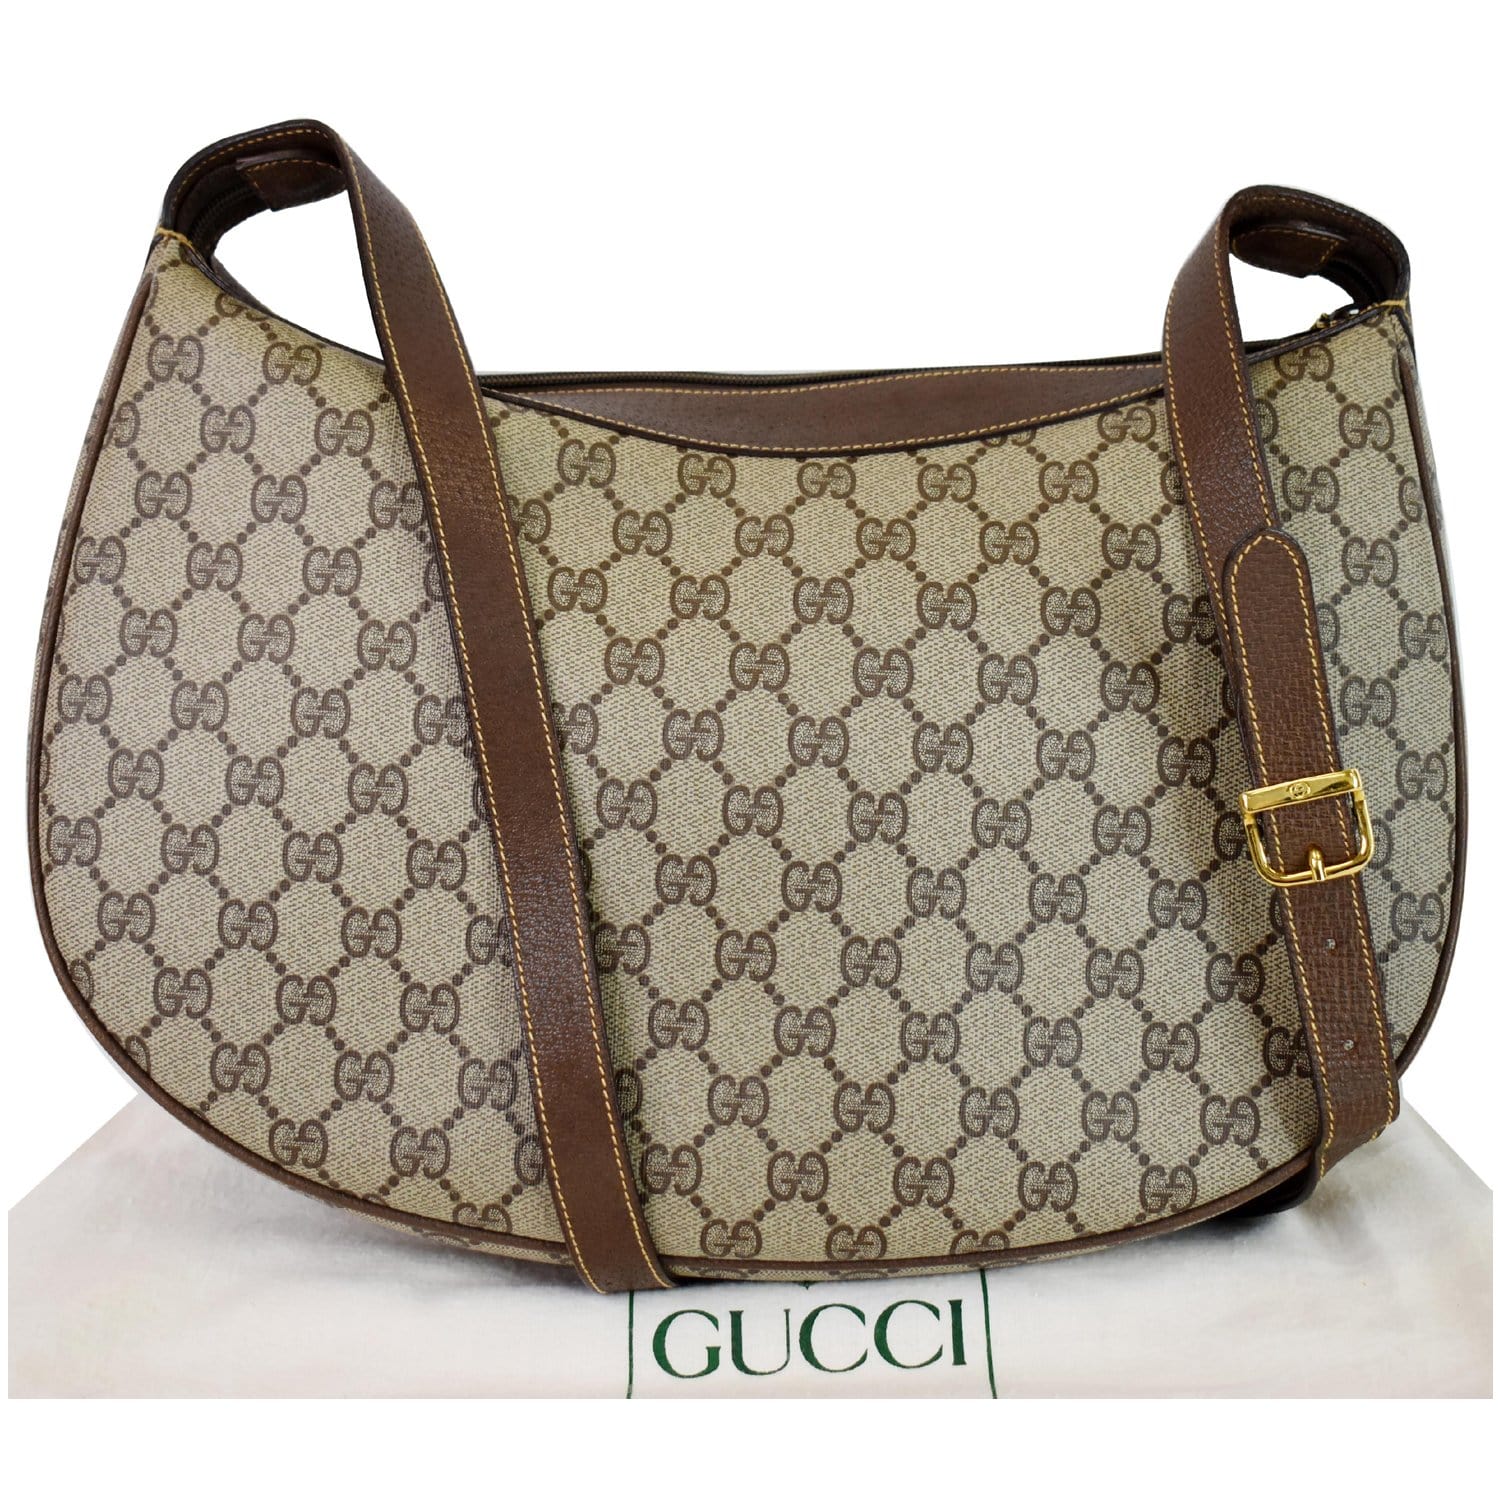 90s Authentic Vintage Bag Gucci/Blue Bag canvas/Canvas Leather Hobo Bag Gucci/Gucci Design Tote bag/Gucci Handbag